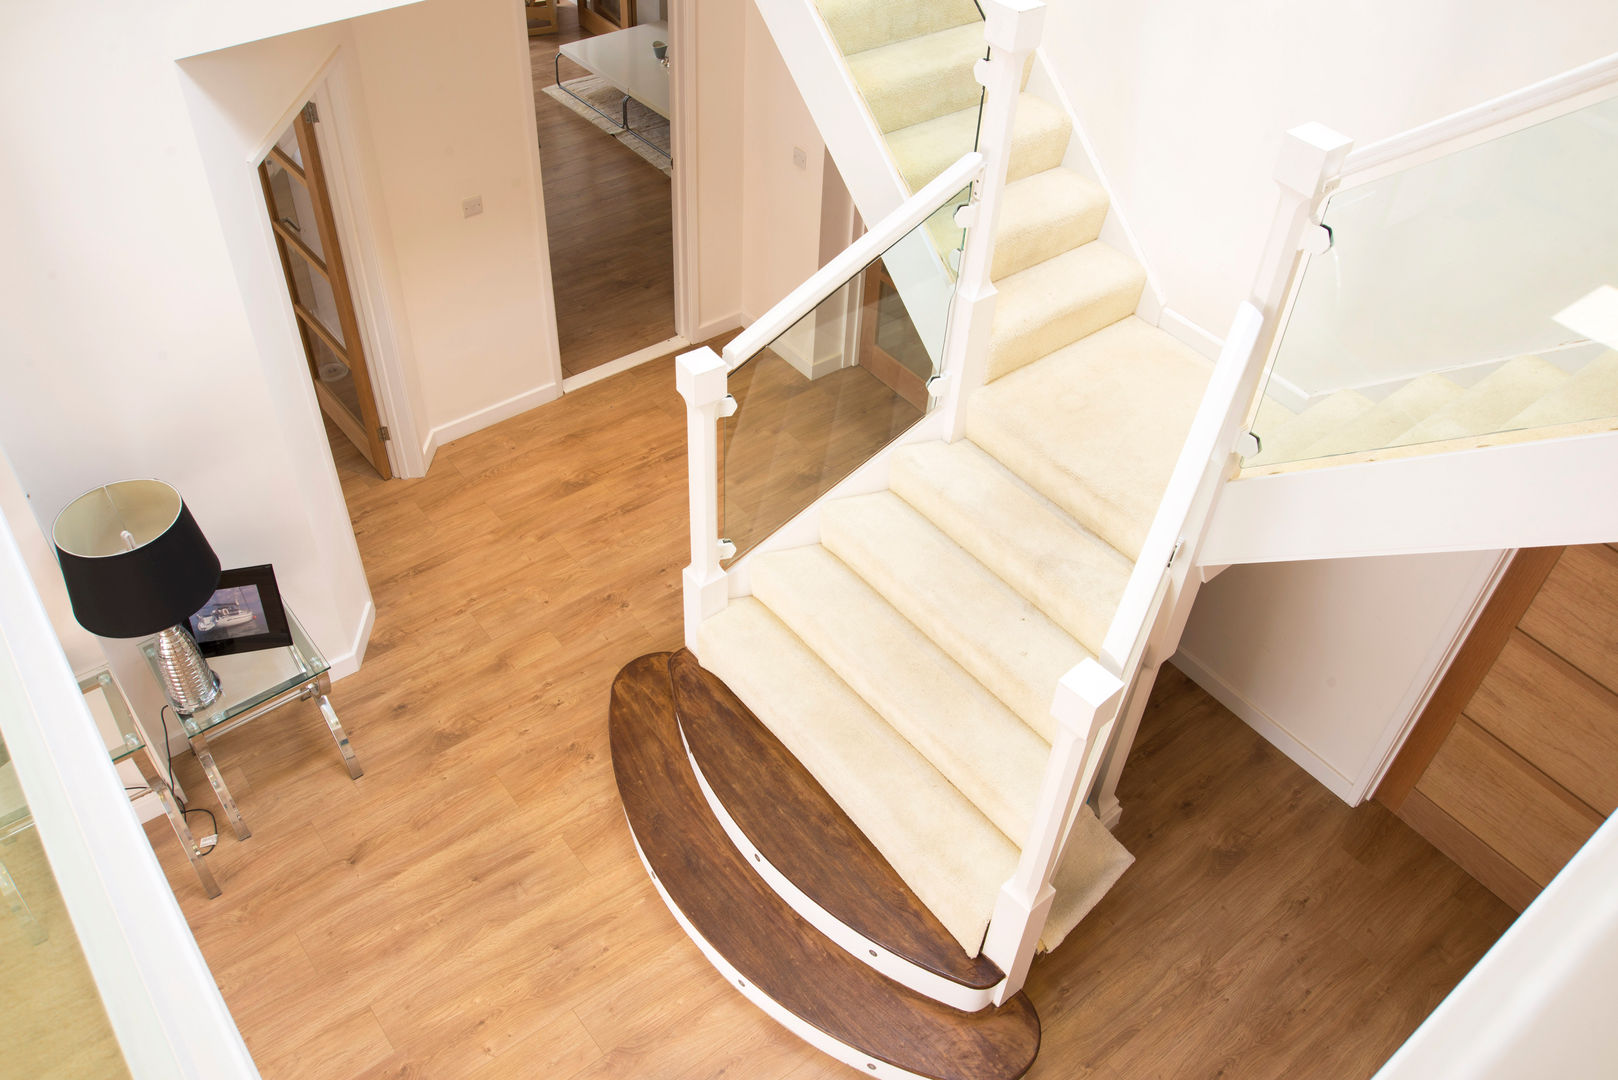 Stairs dwell design Modern corridor, hallway & stairs